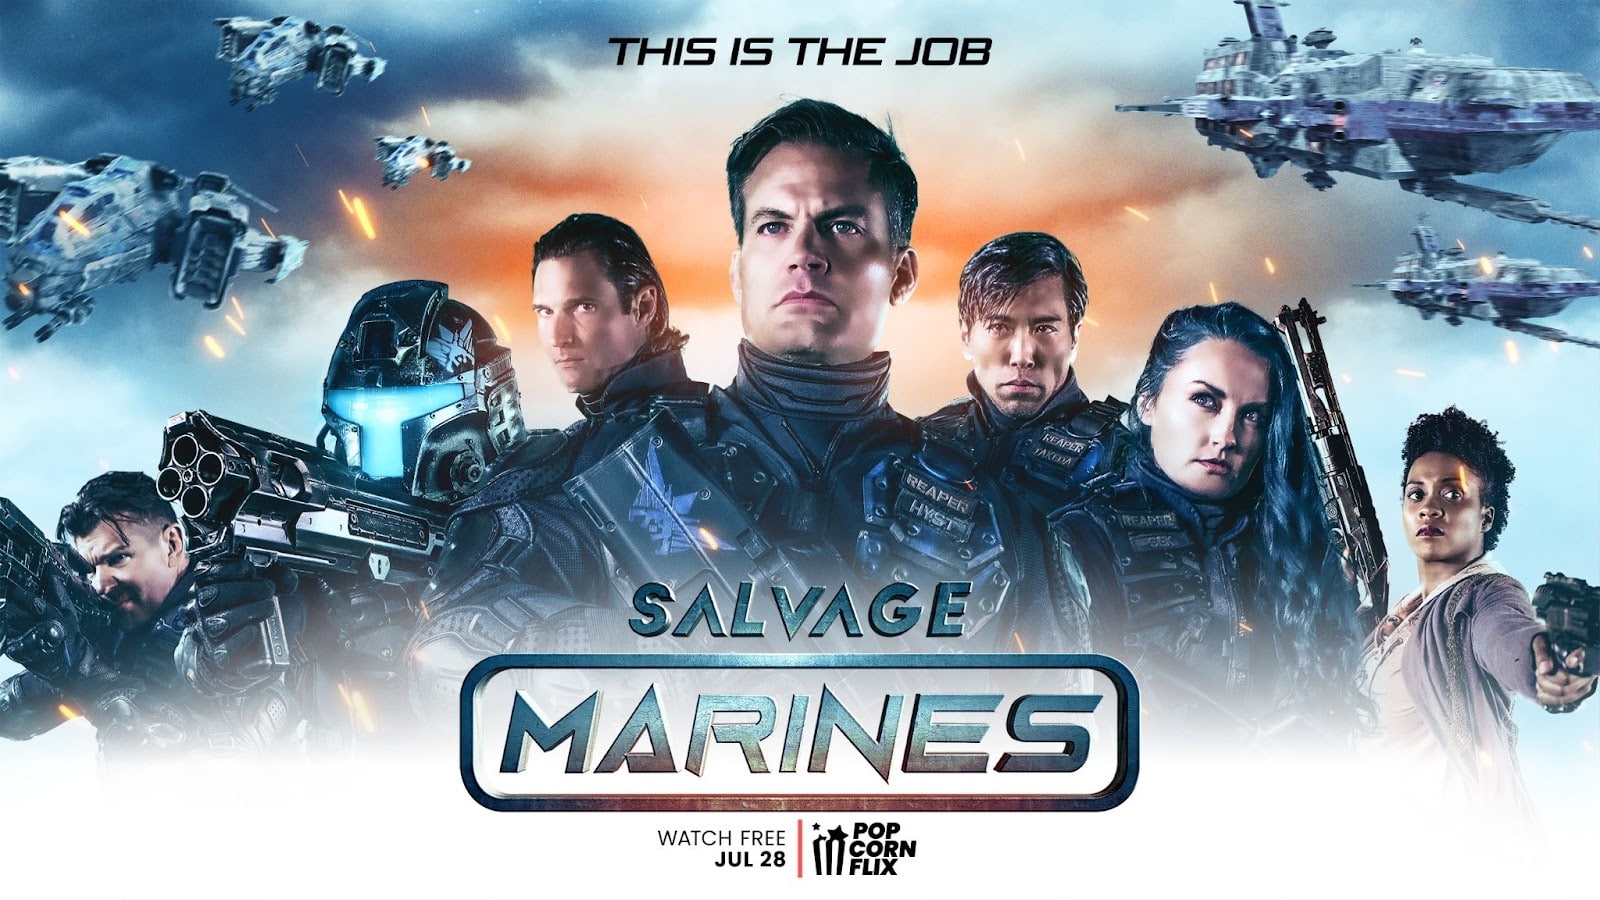 Casper Van Dien stars in Salvage Marines